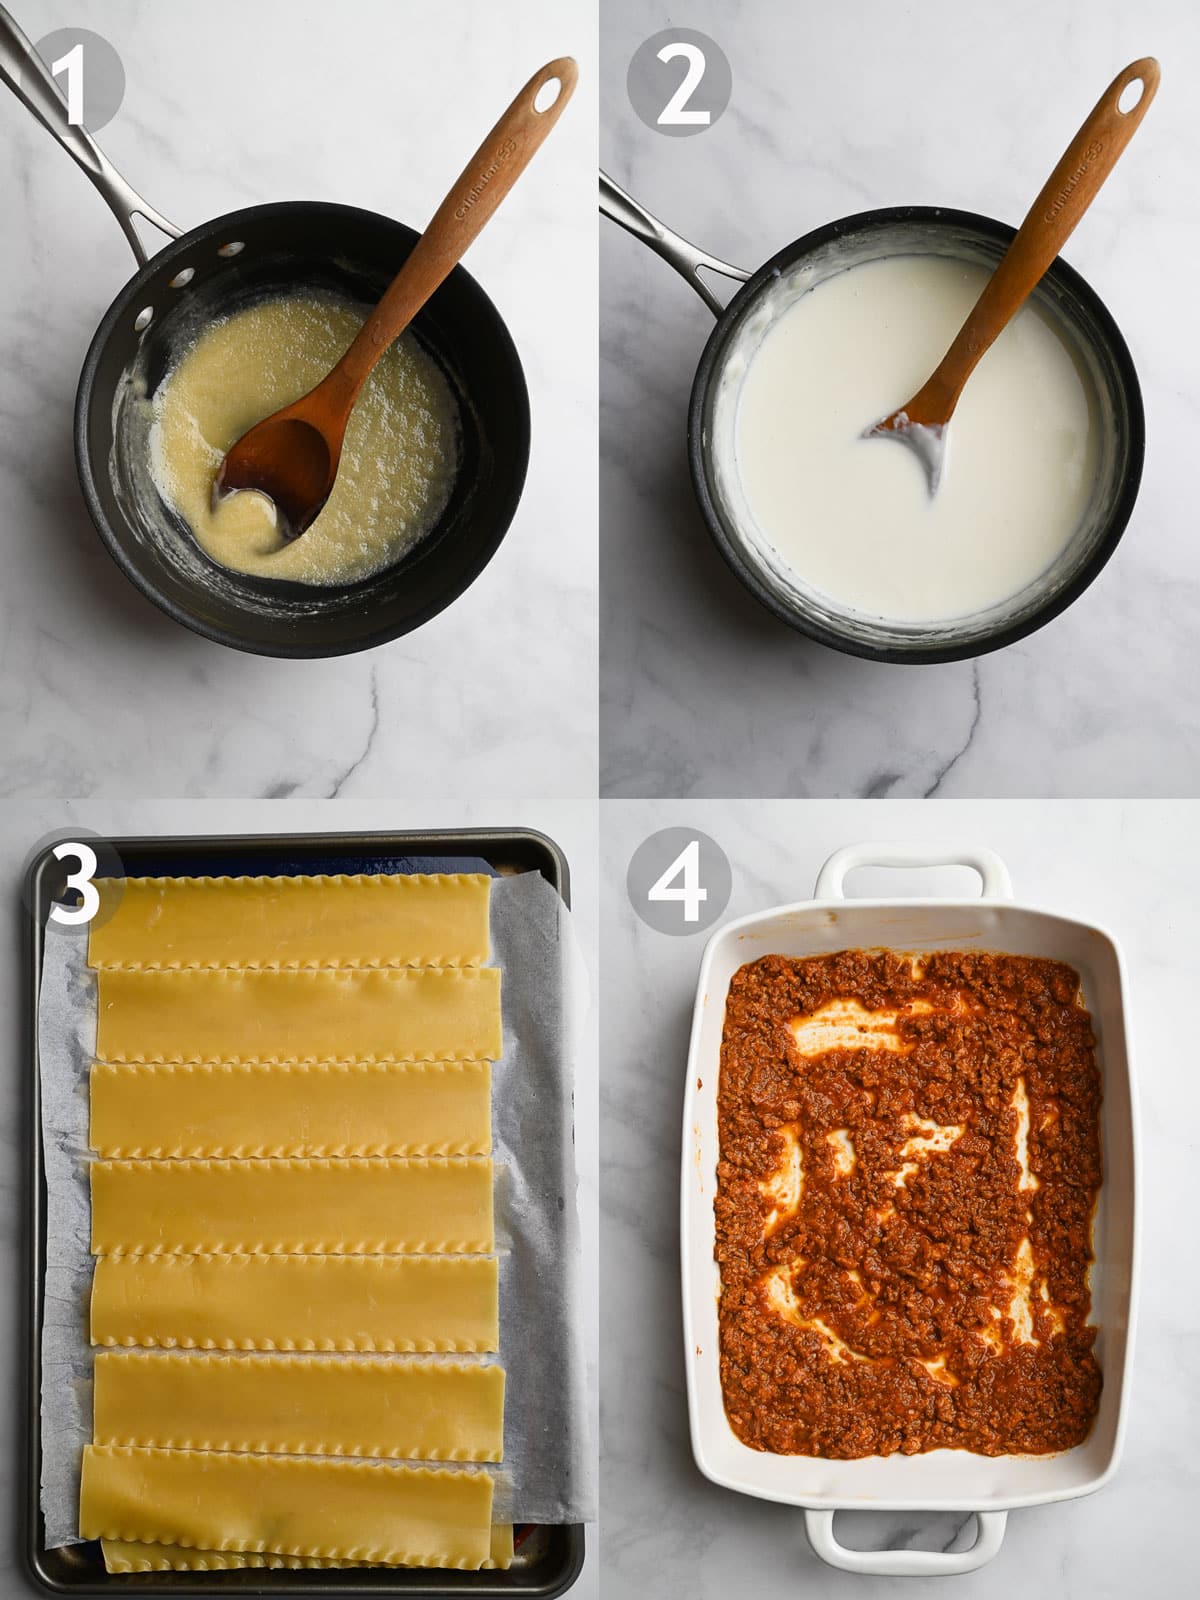 Lasagna, steps 1-4, including making the béchamel and boiling the noodles.